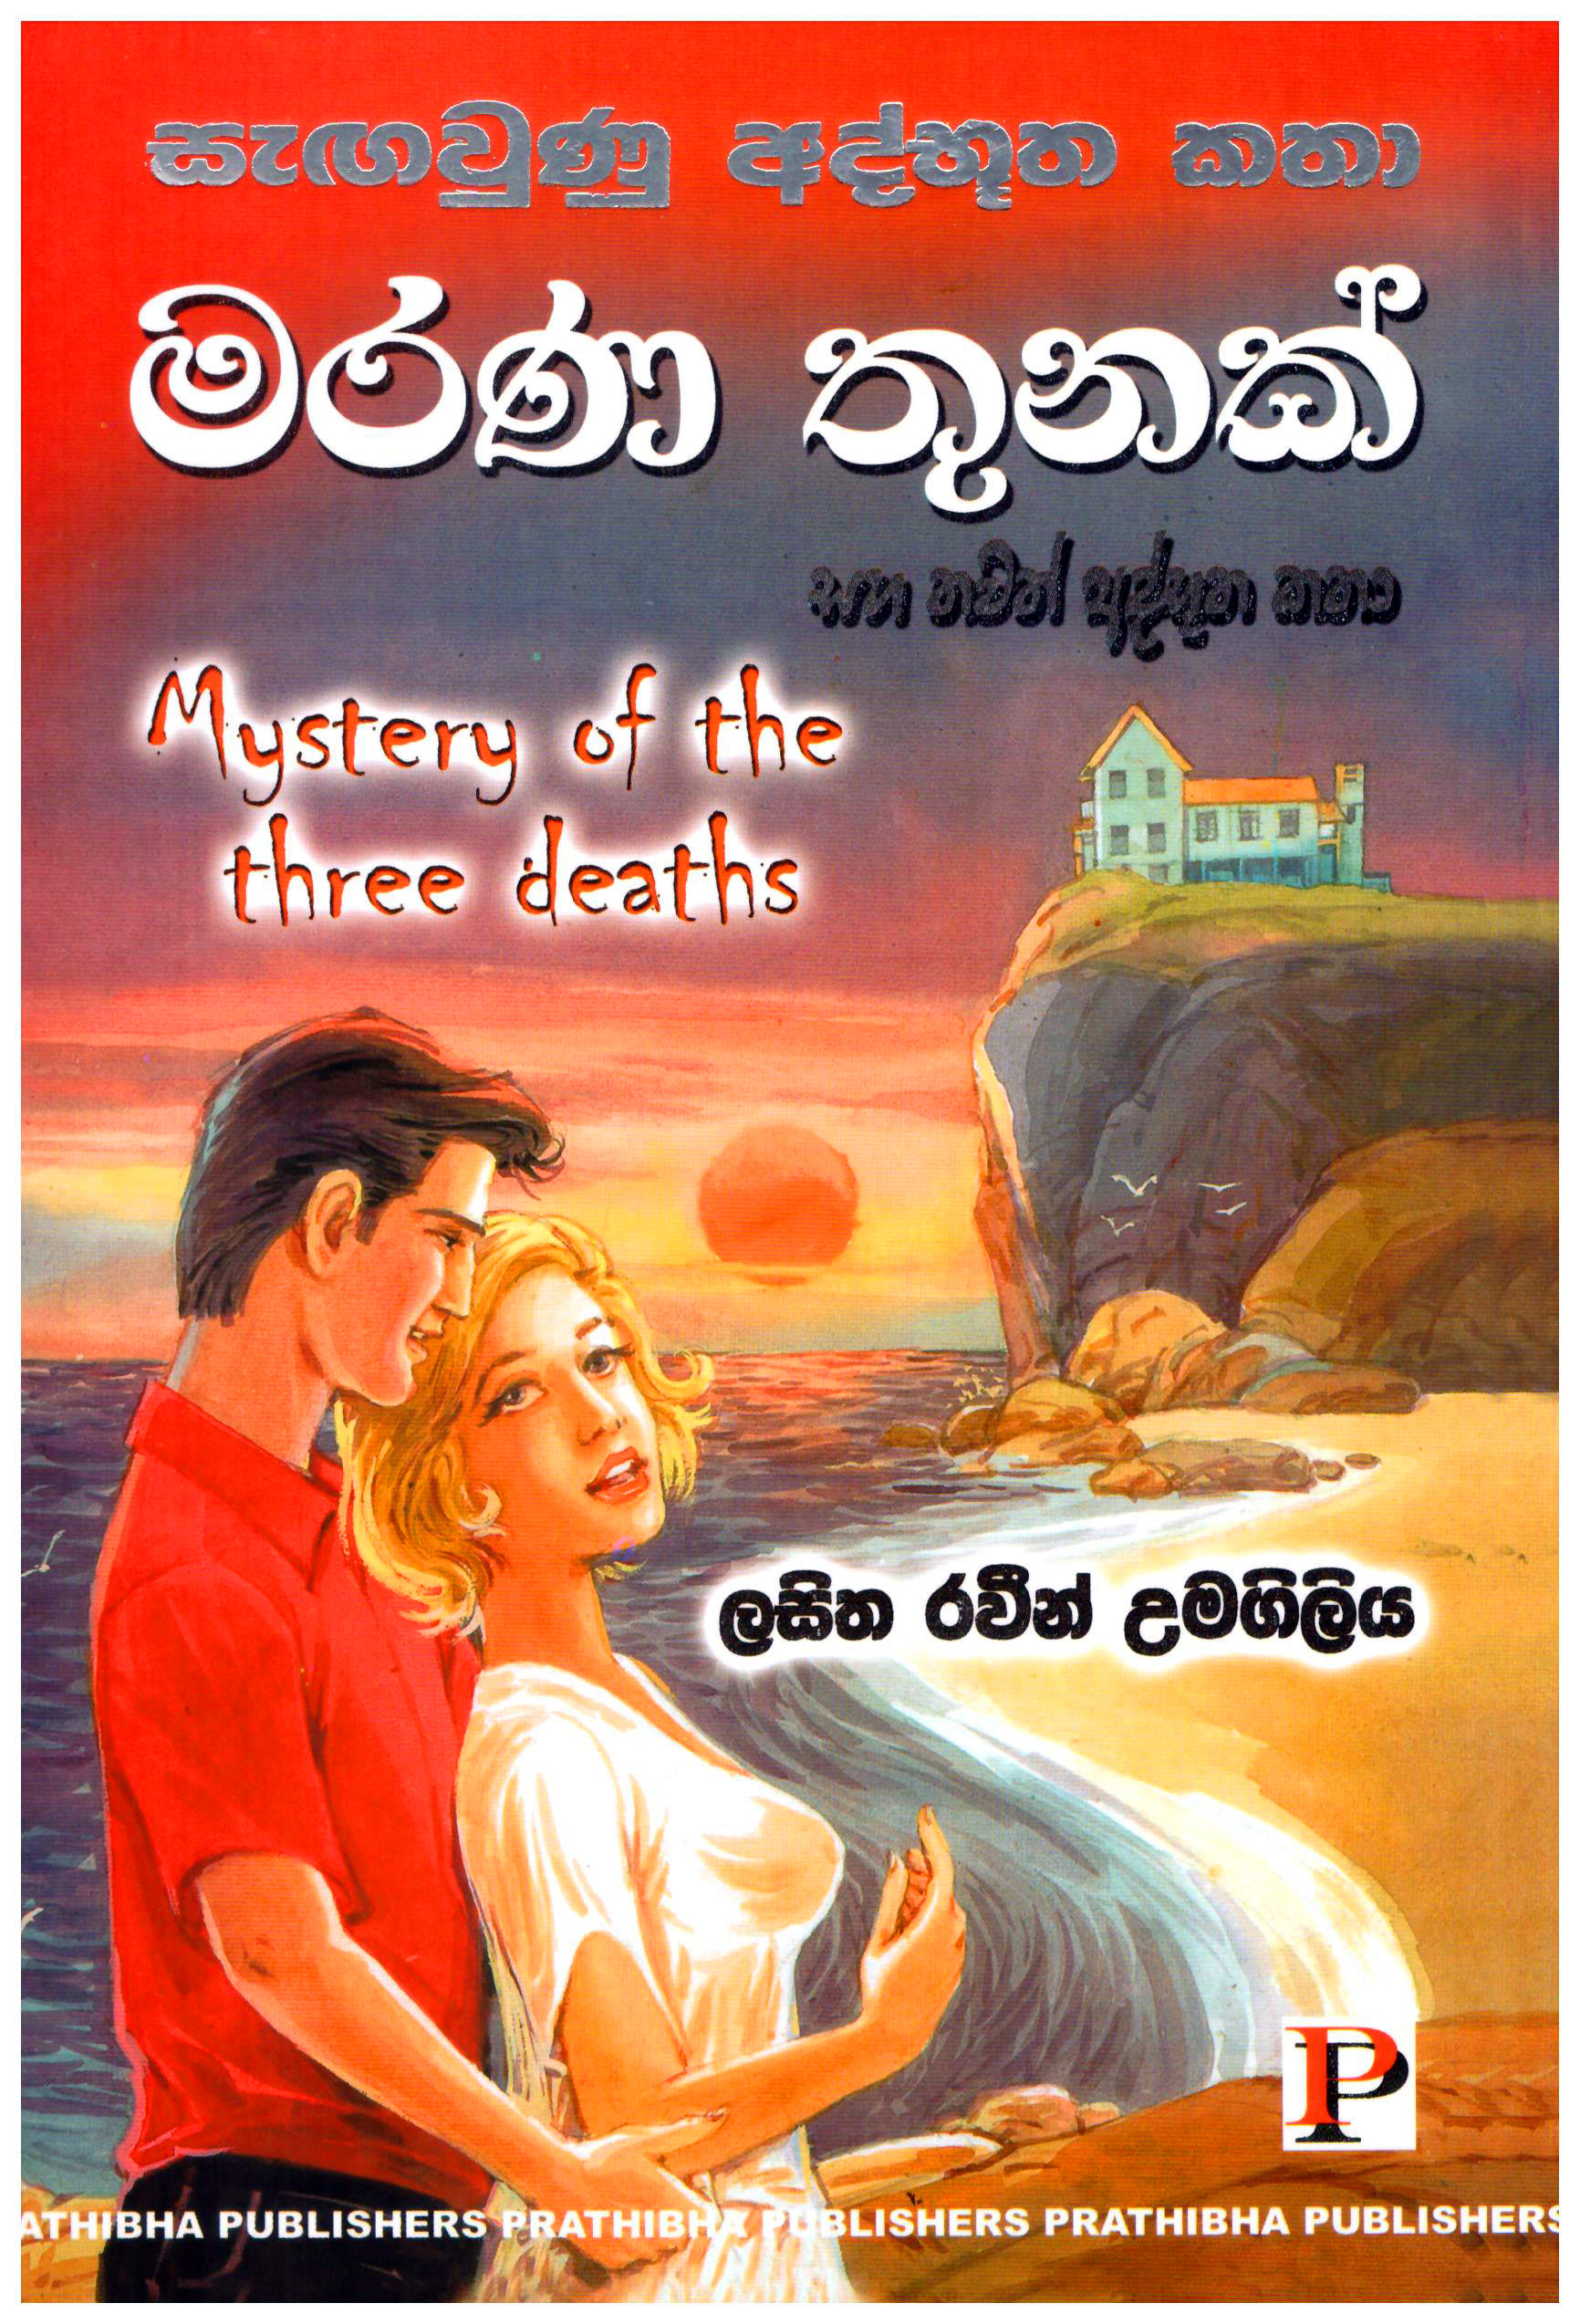 Marana Thunak Saha Thawat Athbutha Katha - Mystery of the Three deaths